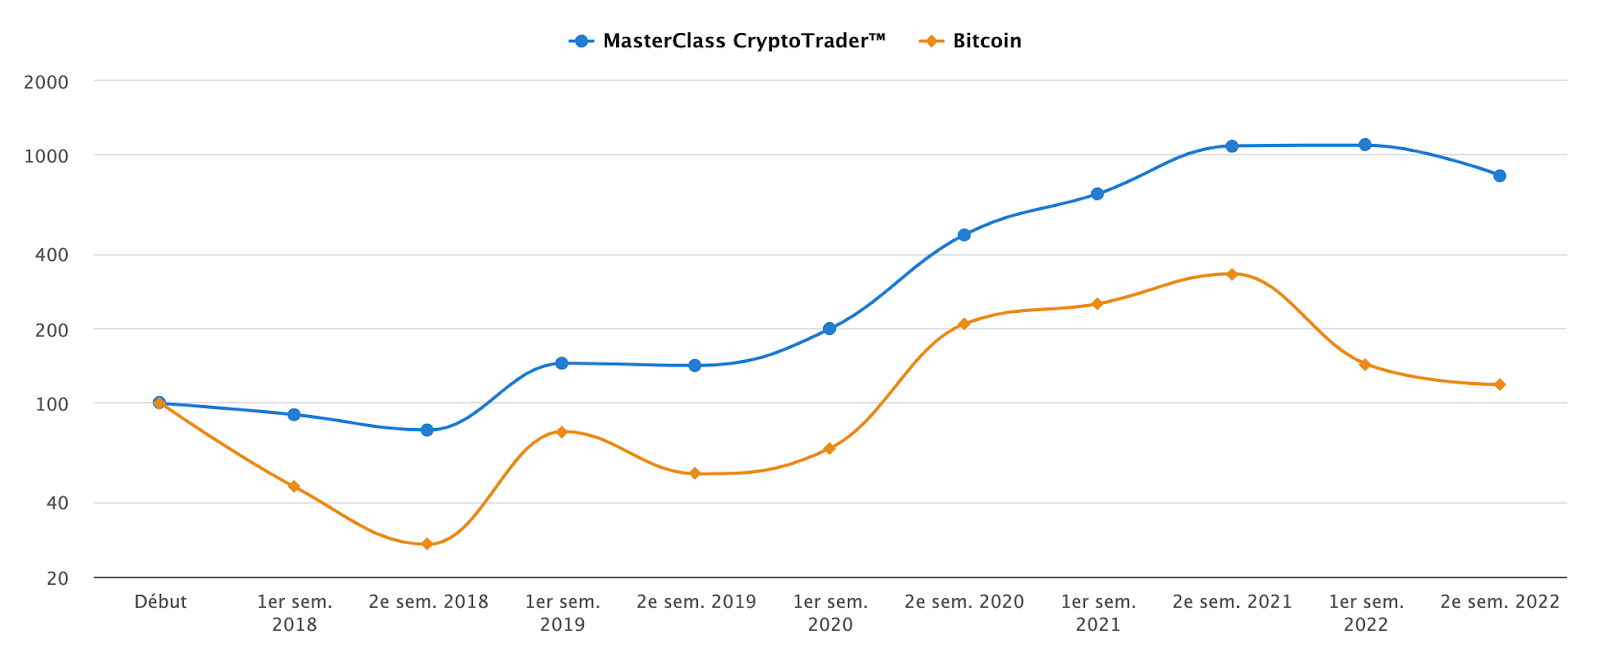 Cryptotrader Masterclass 已经能够为接受培训以了解比特币和加密货币价格的交易者产生定期利润